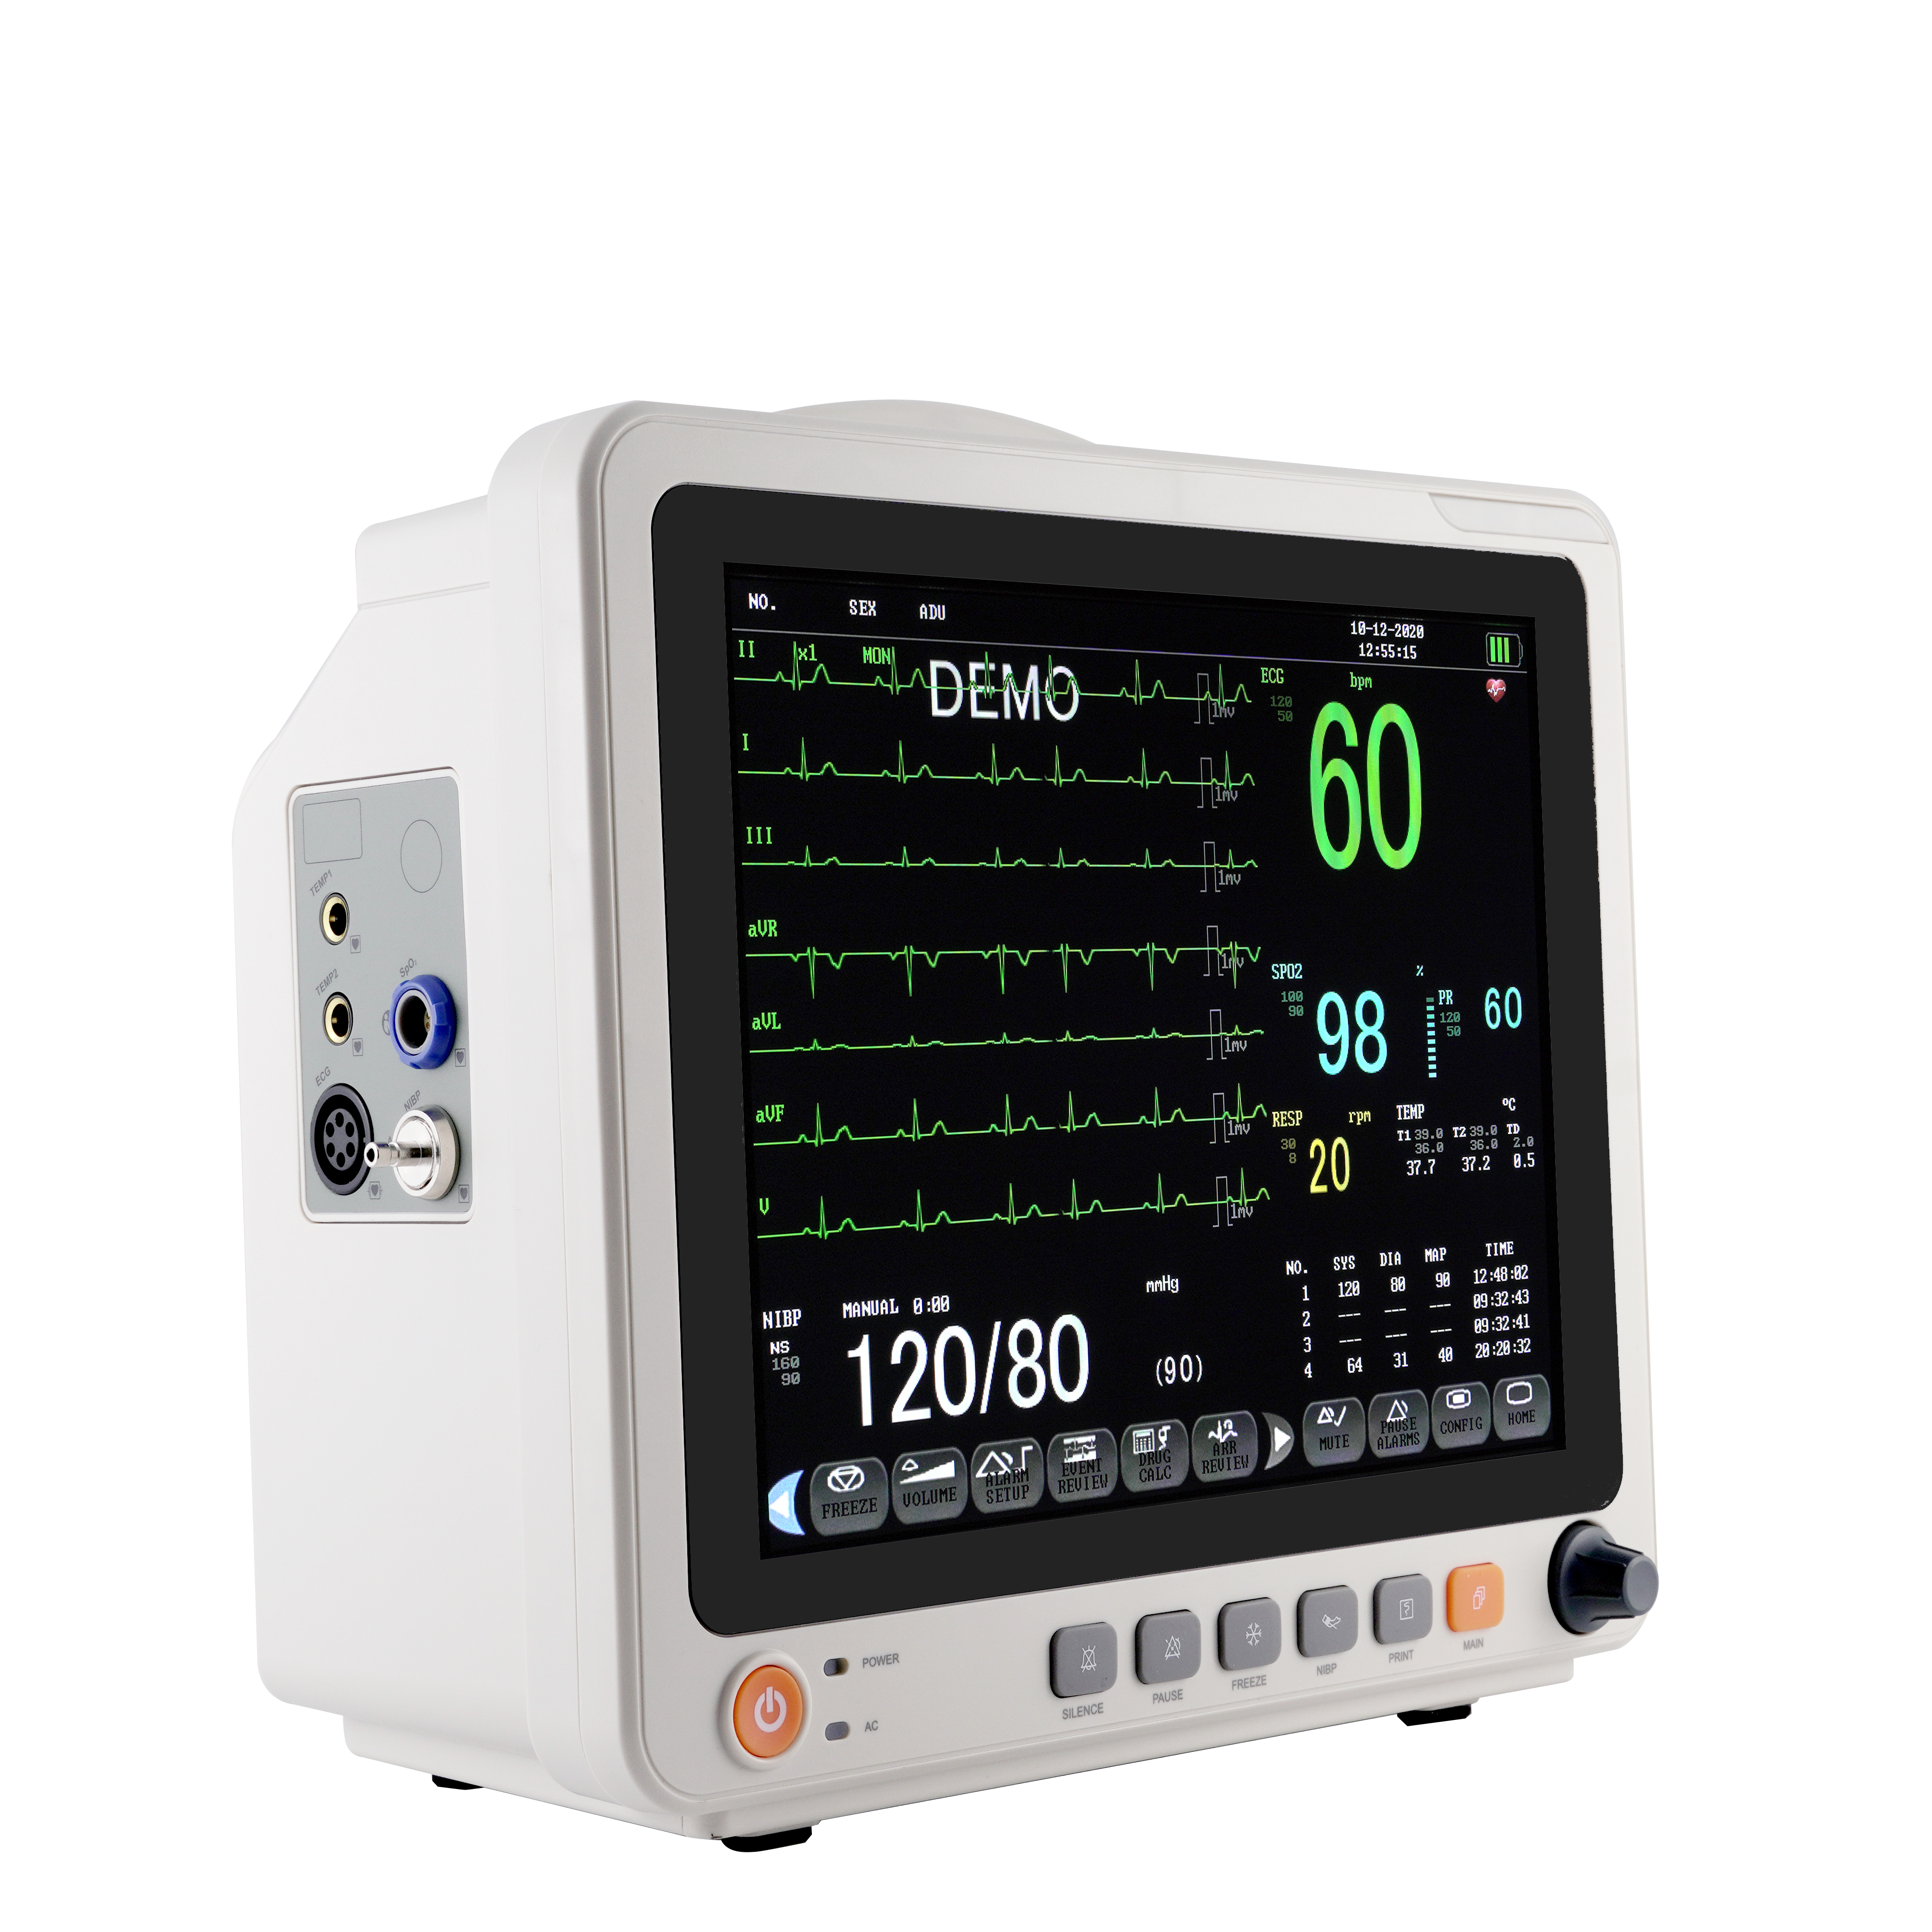 MS-8200 Multi-Parameter Patient Monitor